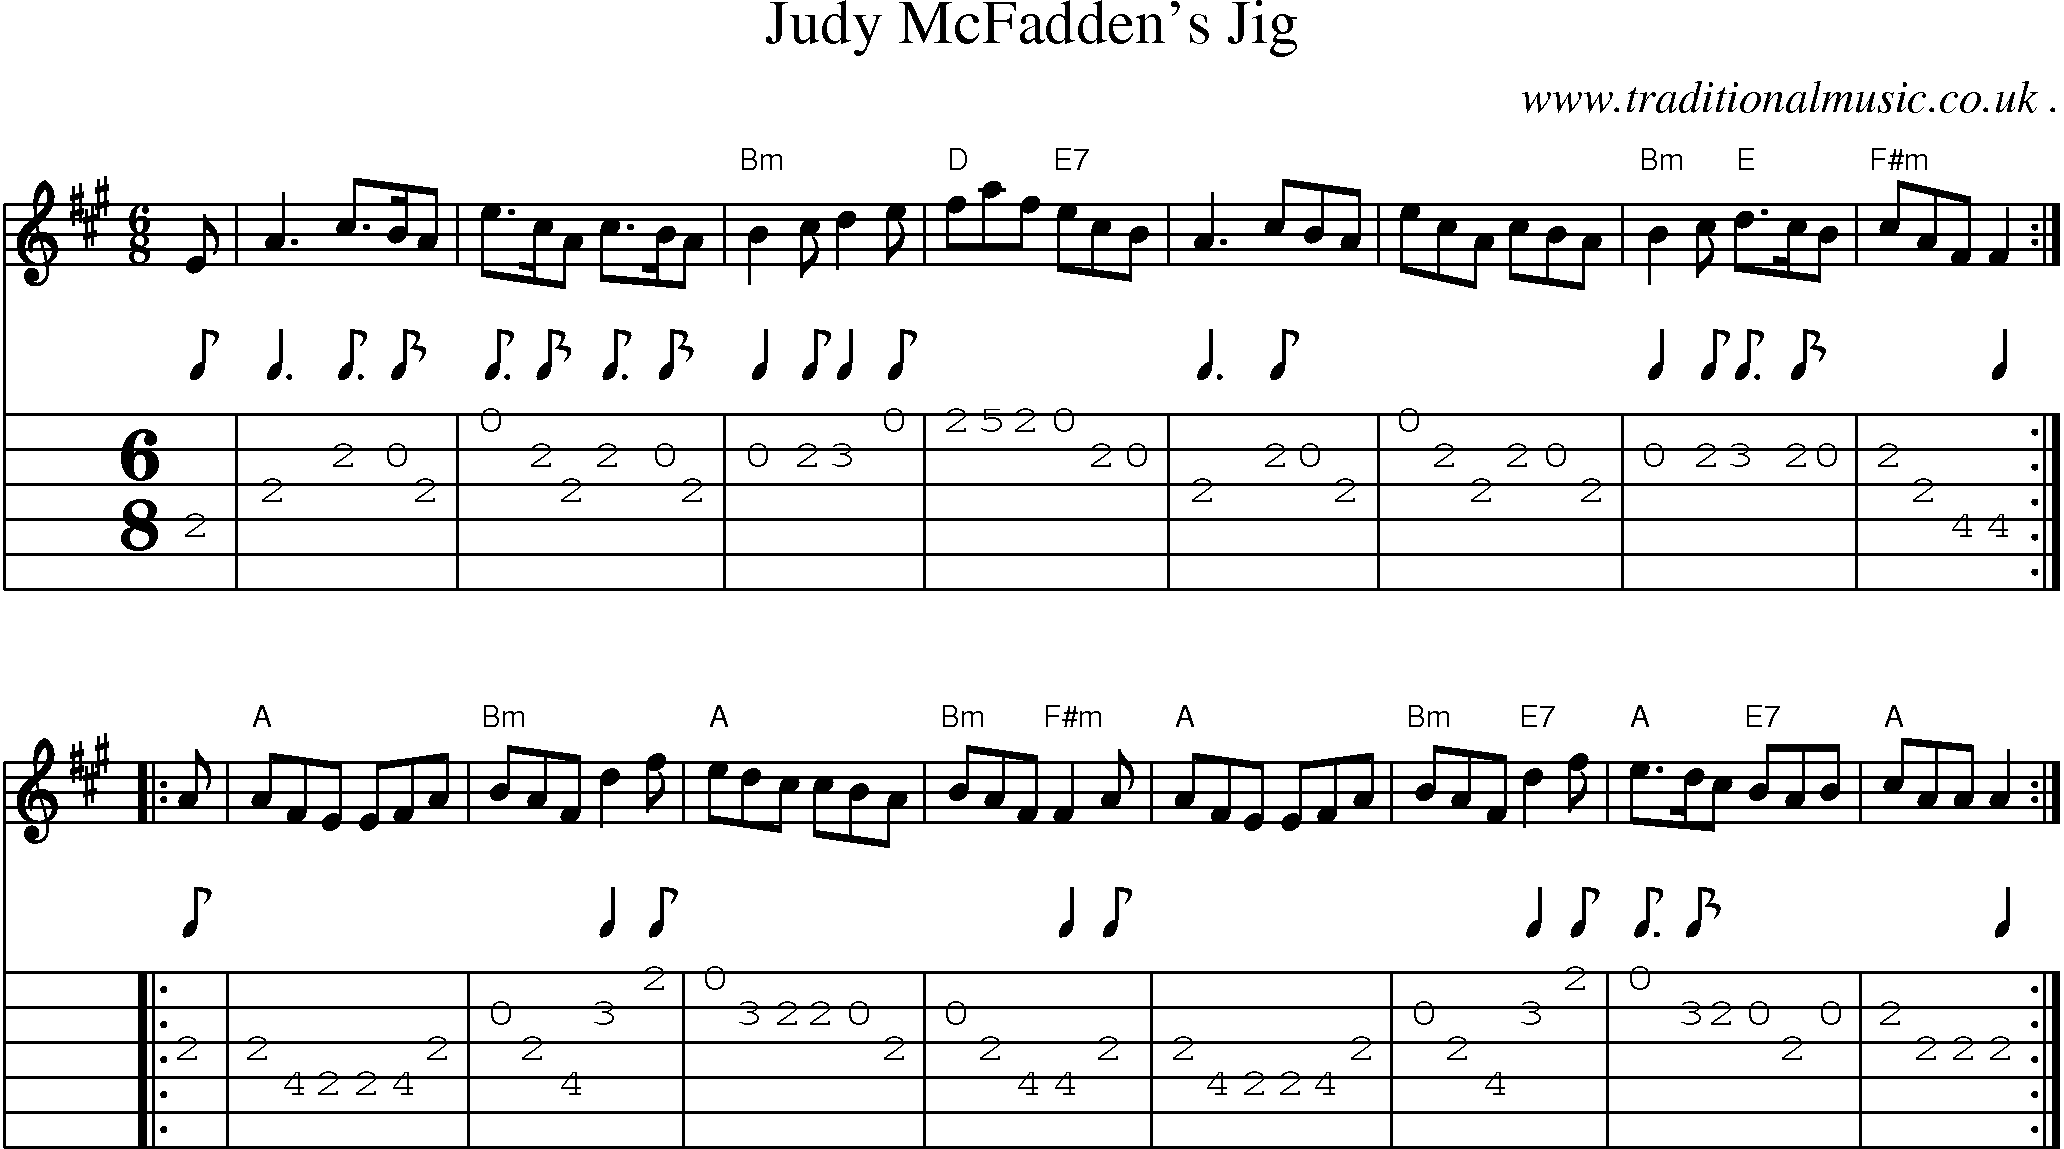 Sheet-music  score, Chords and Guitar Tabs for Judy Mcfaddens Jig